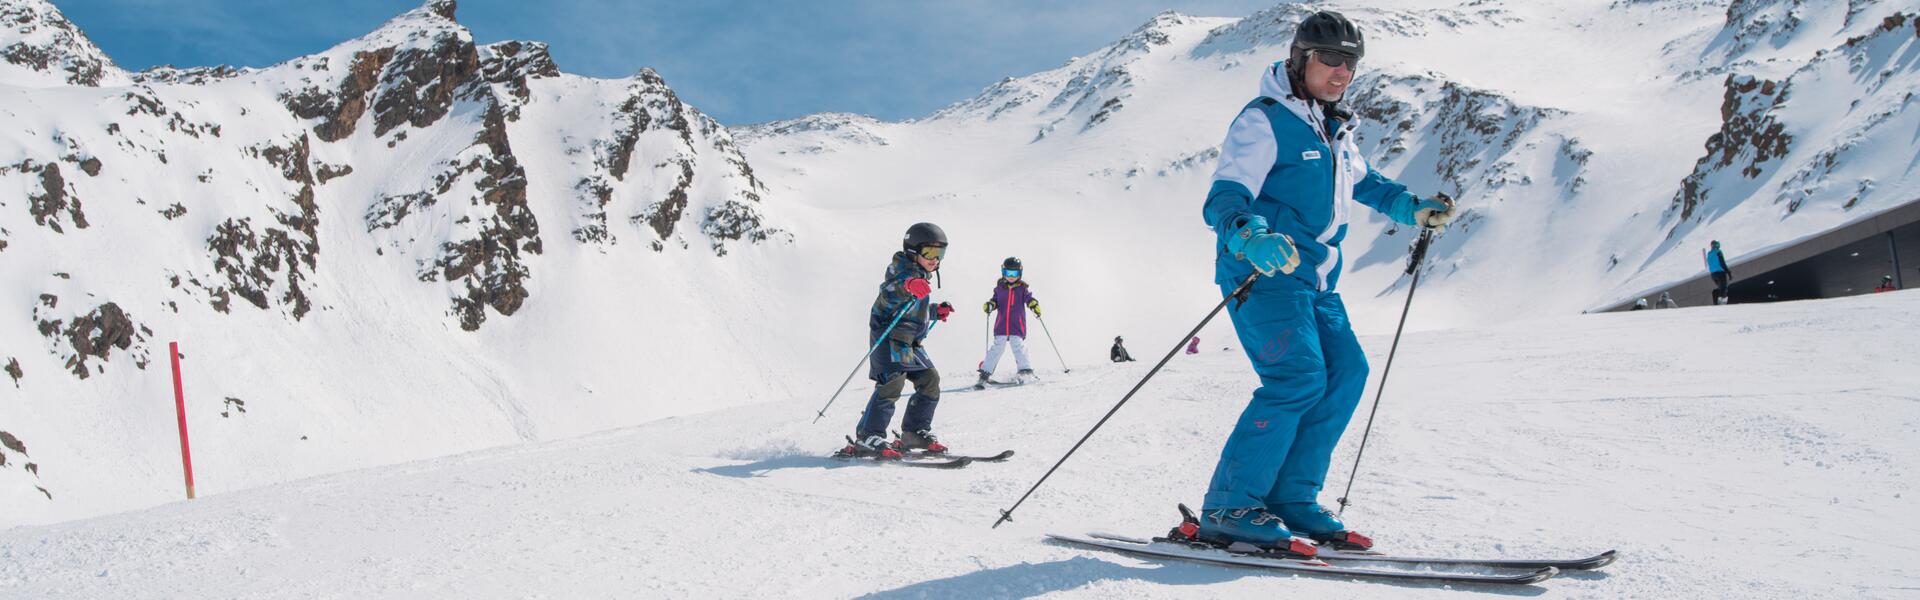 ski course on holiday in Tyrol | © Ötztal Tourismus